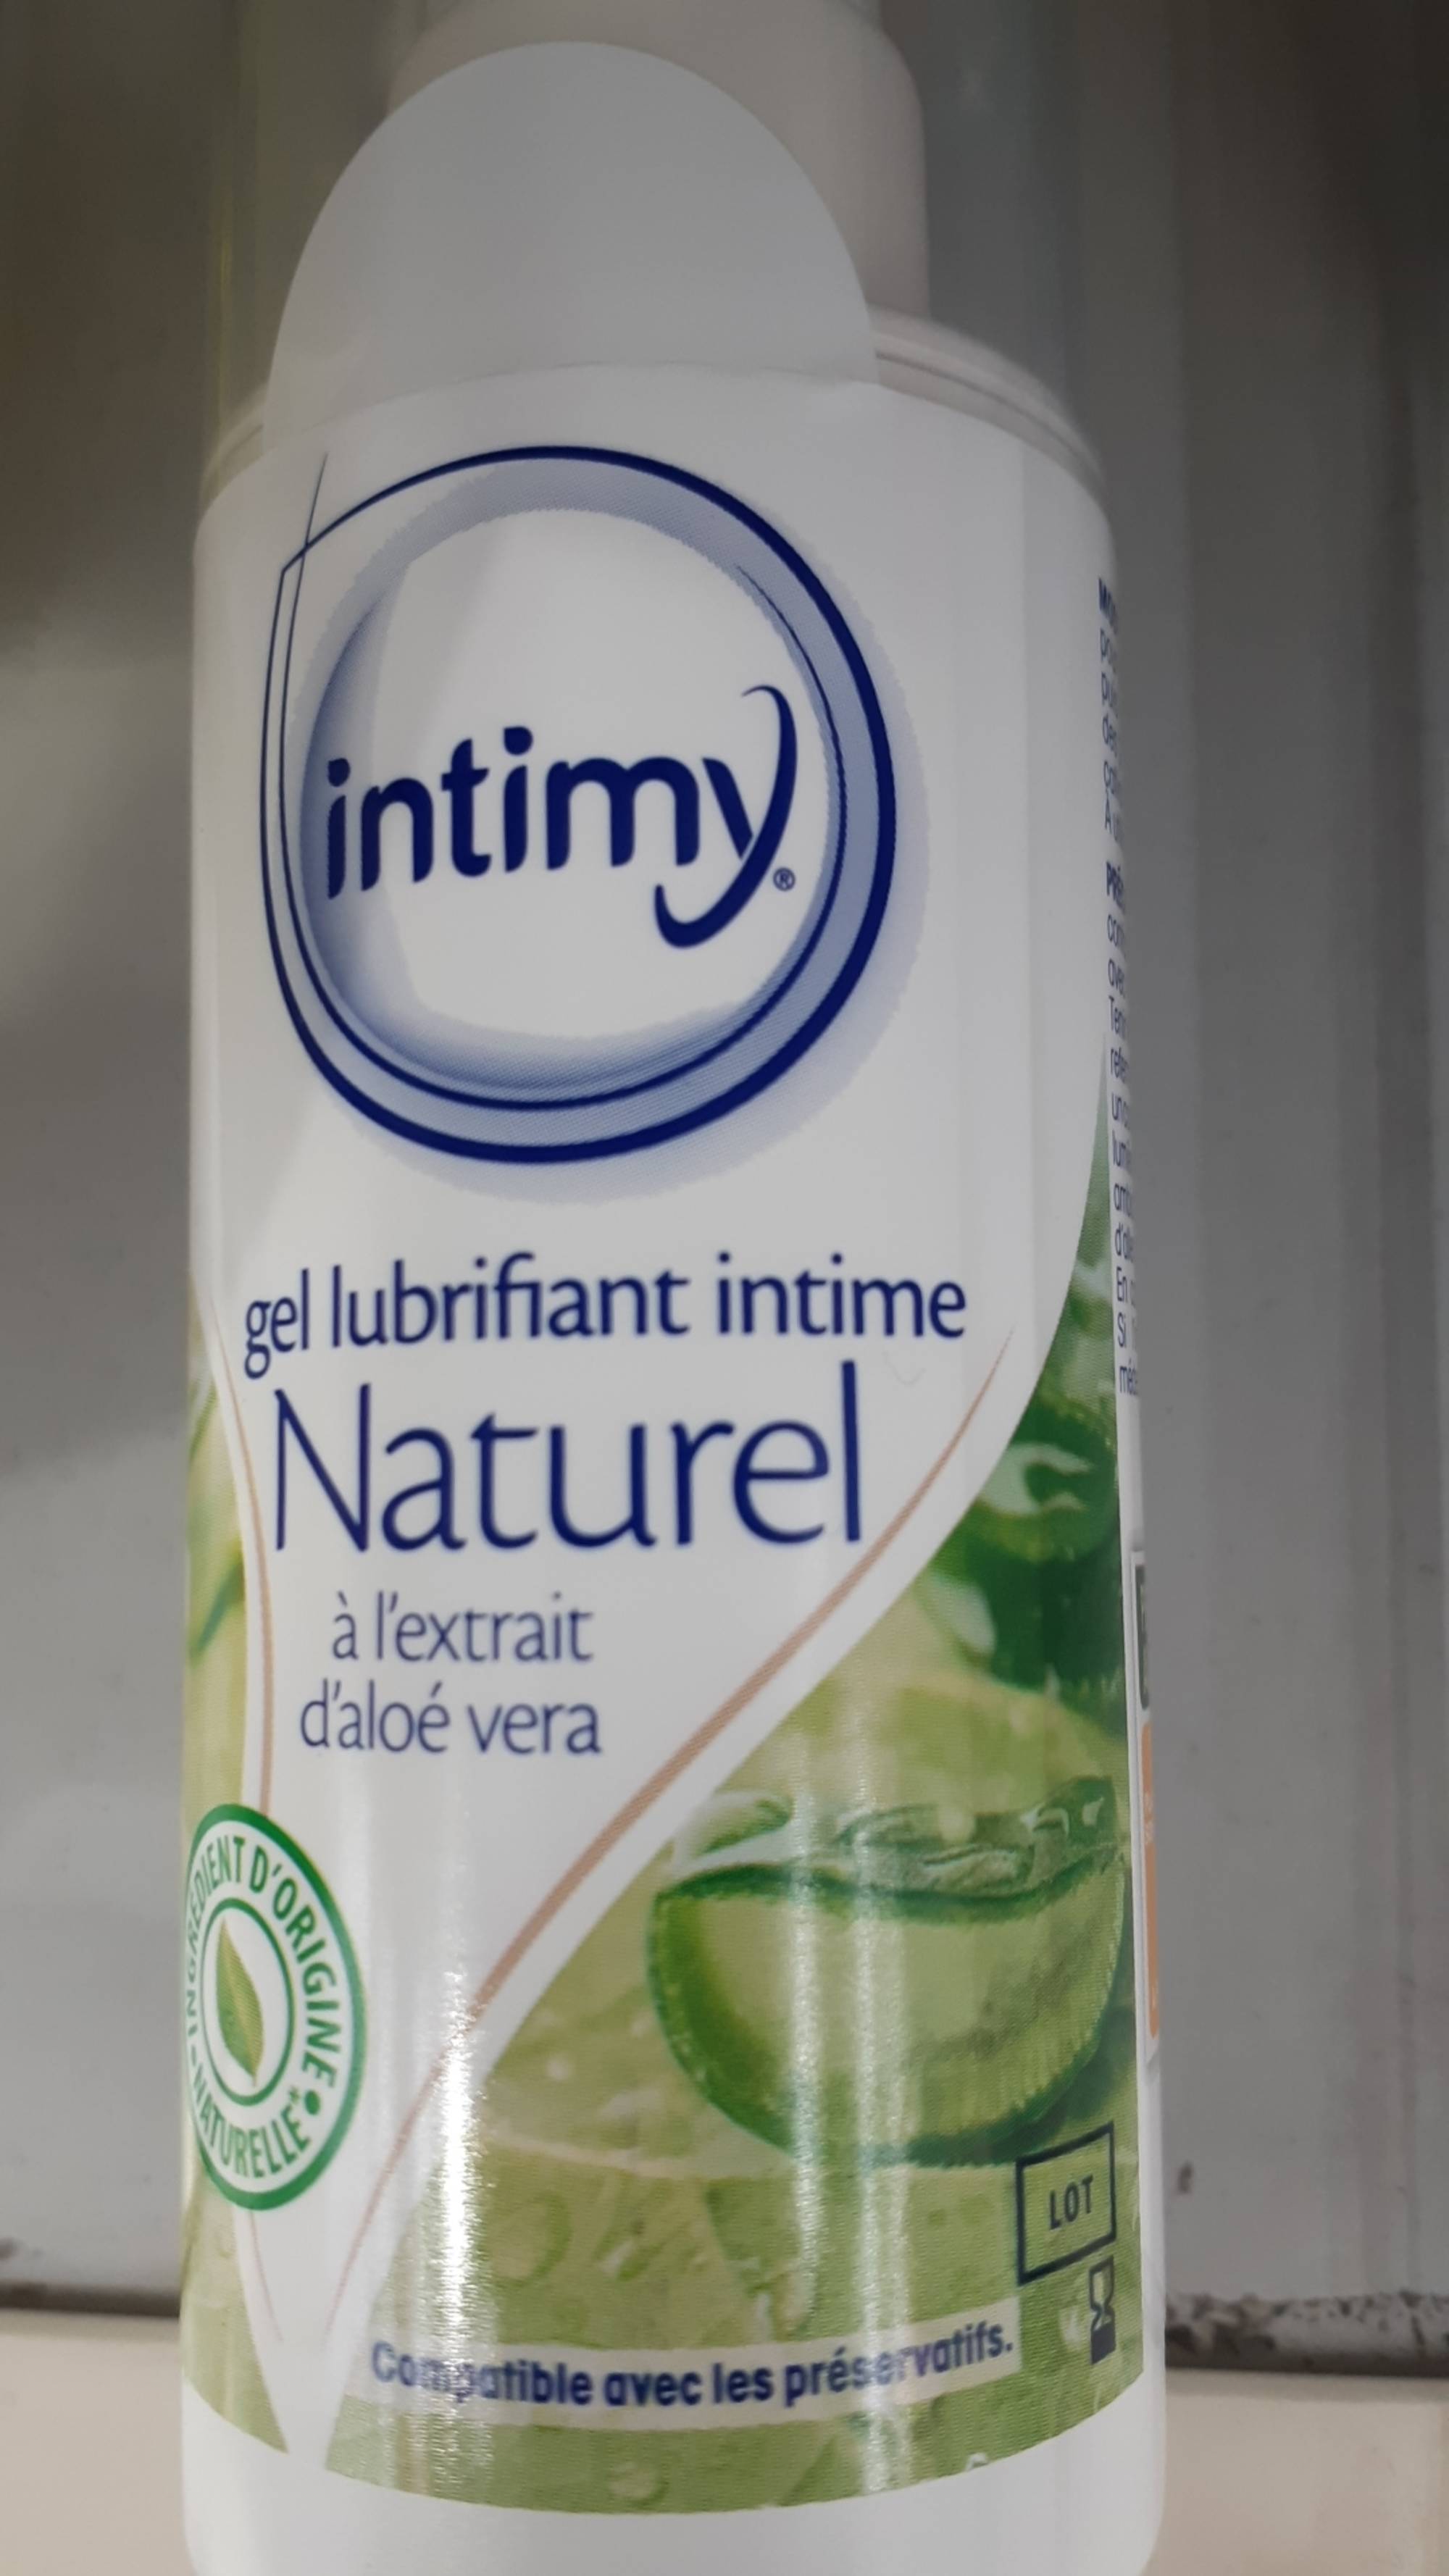 Gel lubrifiant Intime Naturel - Intimy